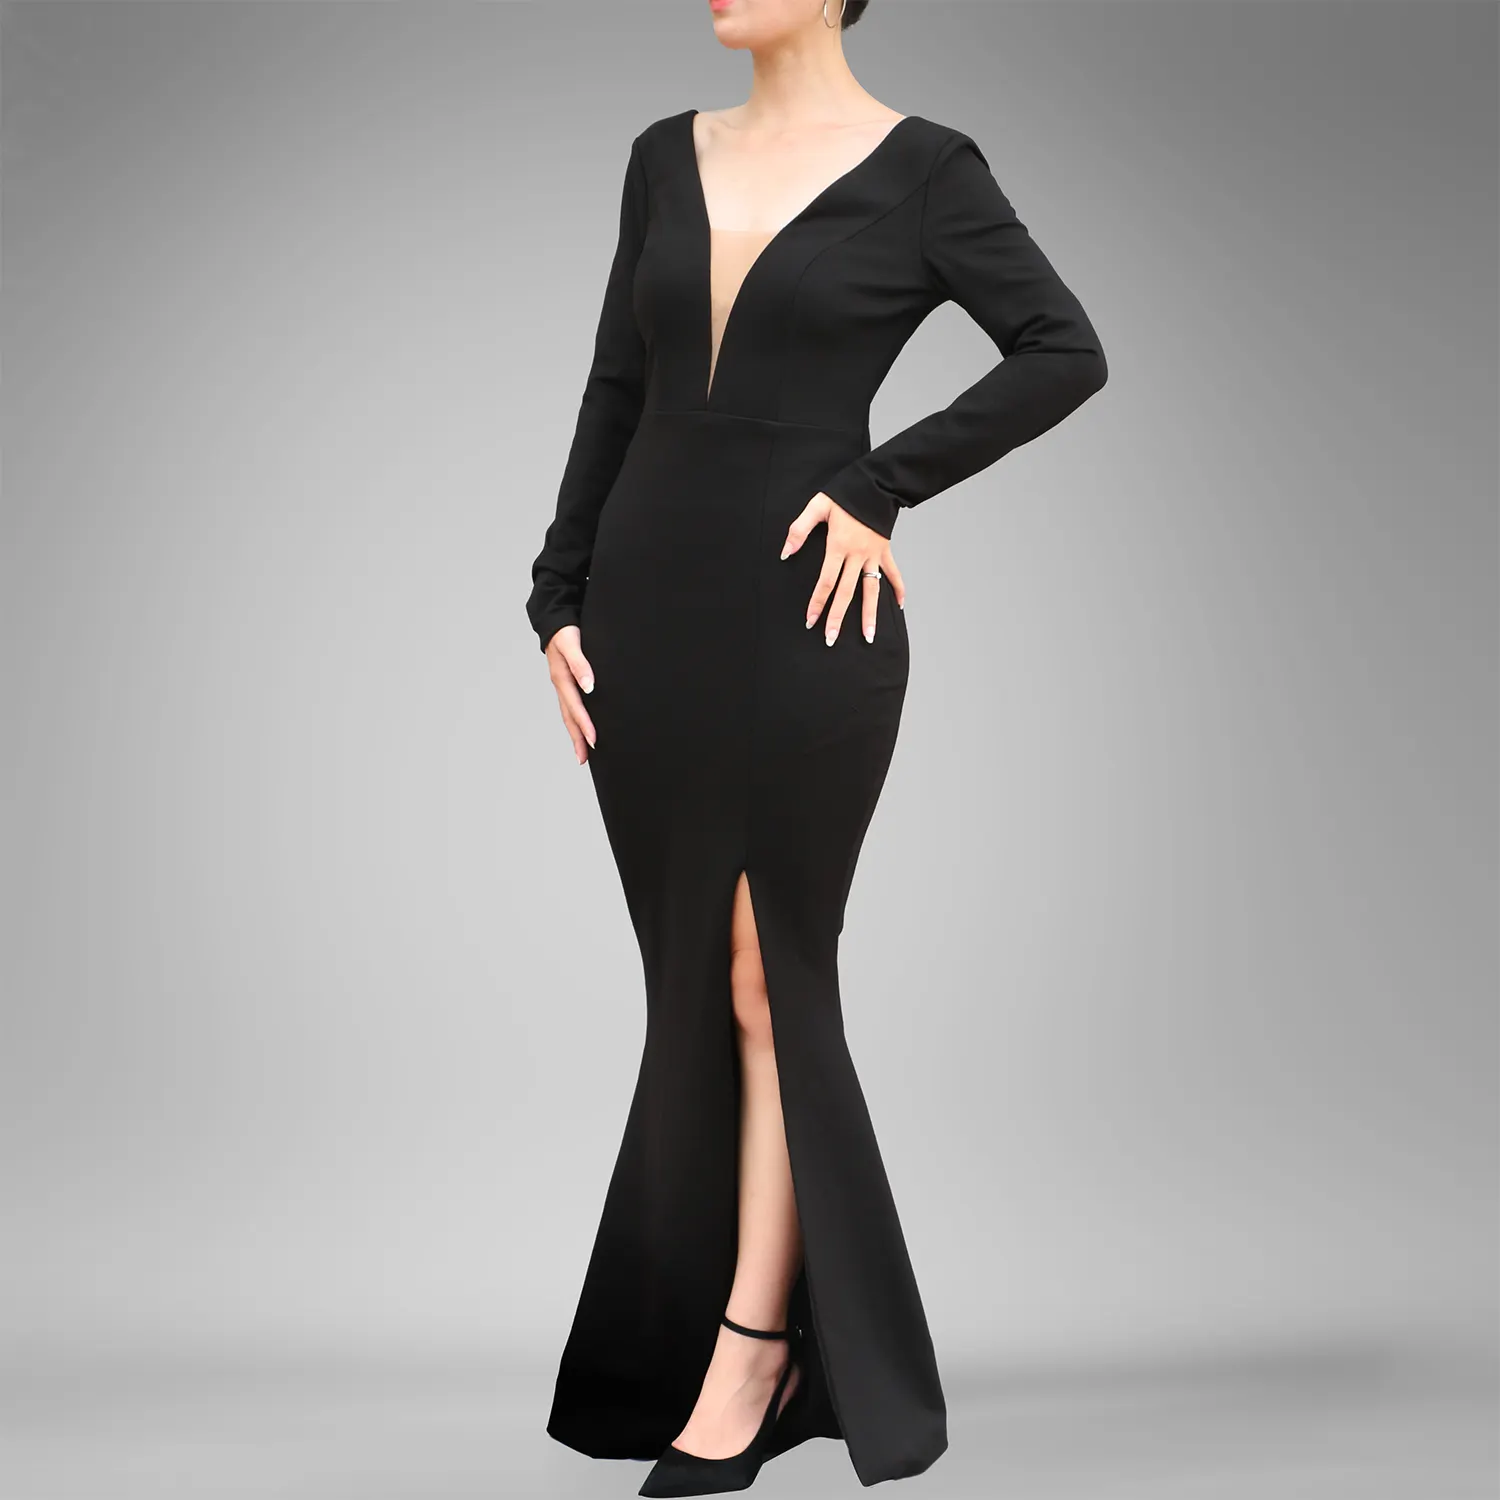 New Design Fashion Backless Long Sleeve V-Neck Evening Dress Women's Elegant Black High Split MAXI Dress